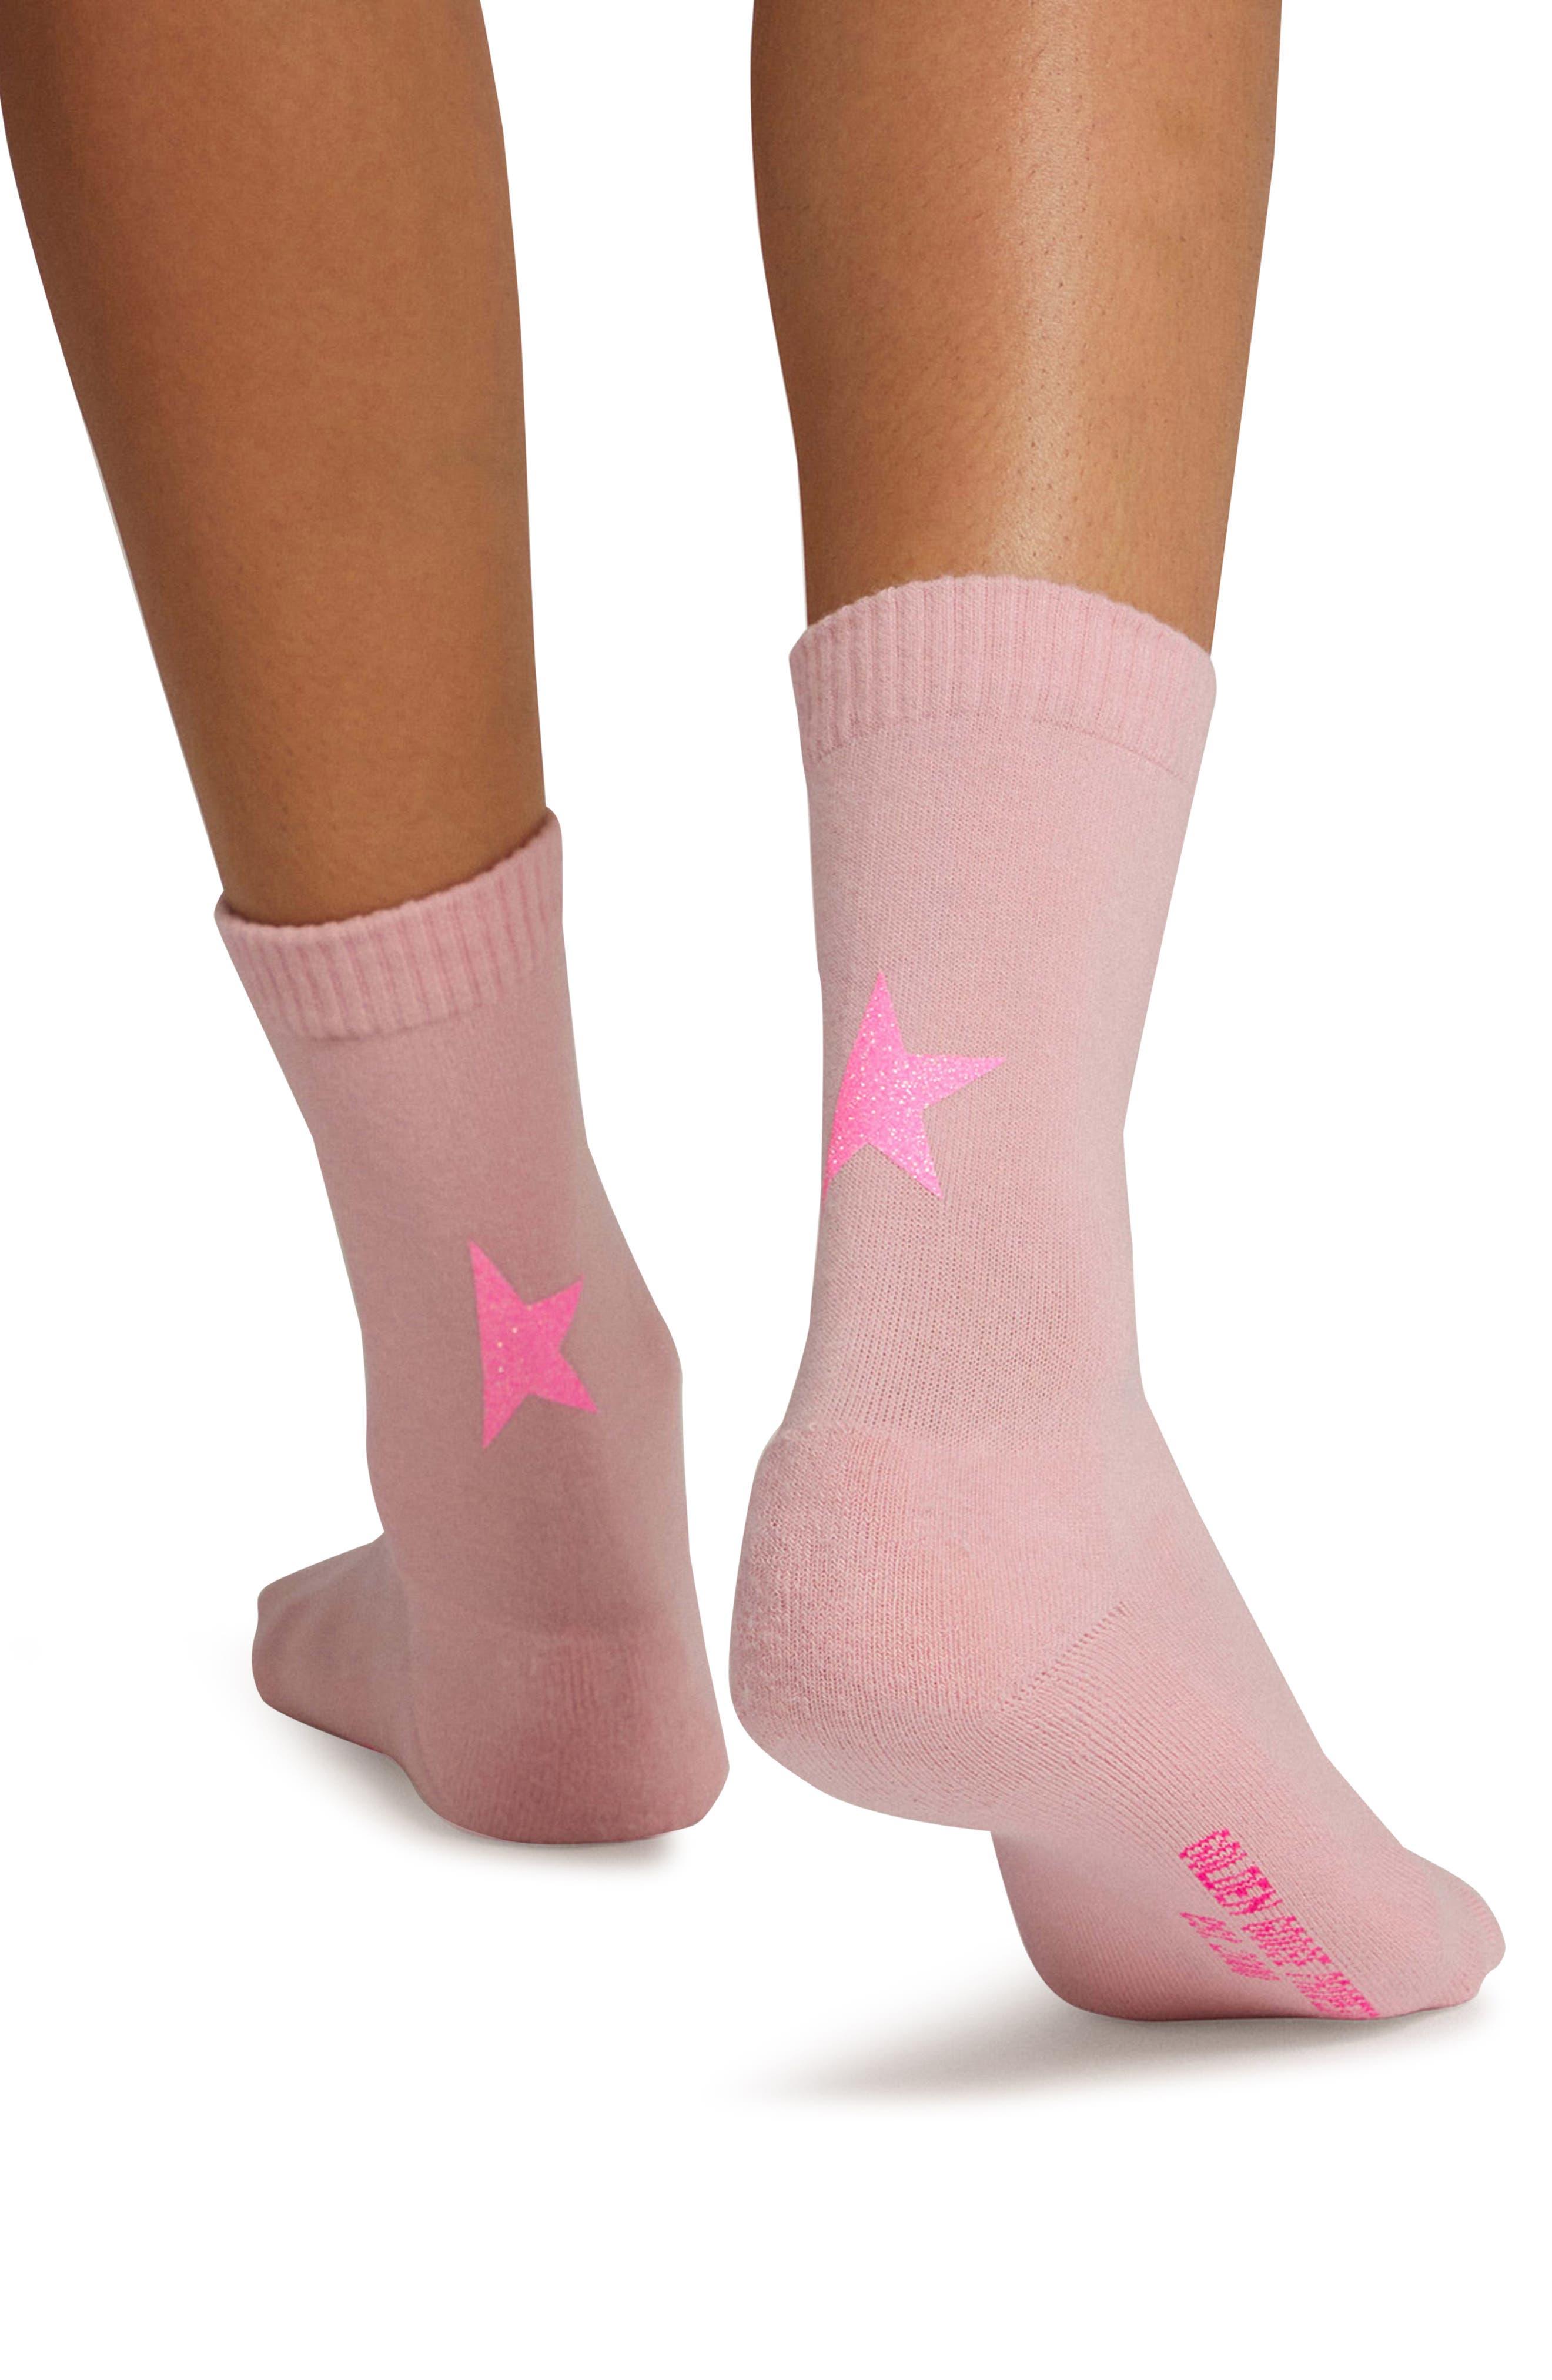 ASOS DESIGN calf length sheer socks in glitter star print in black